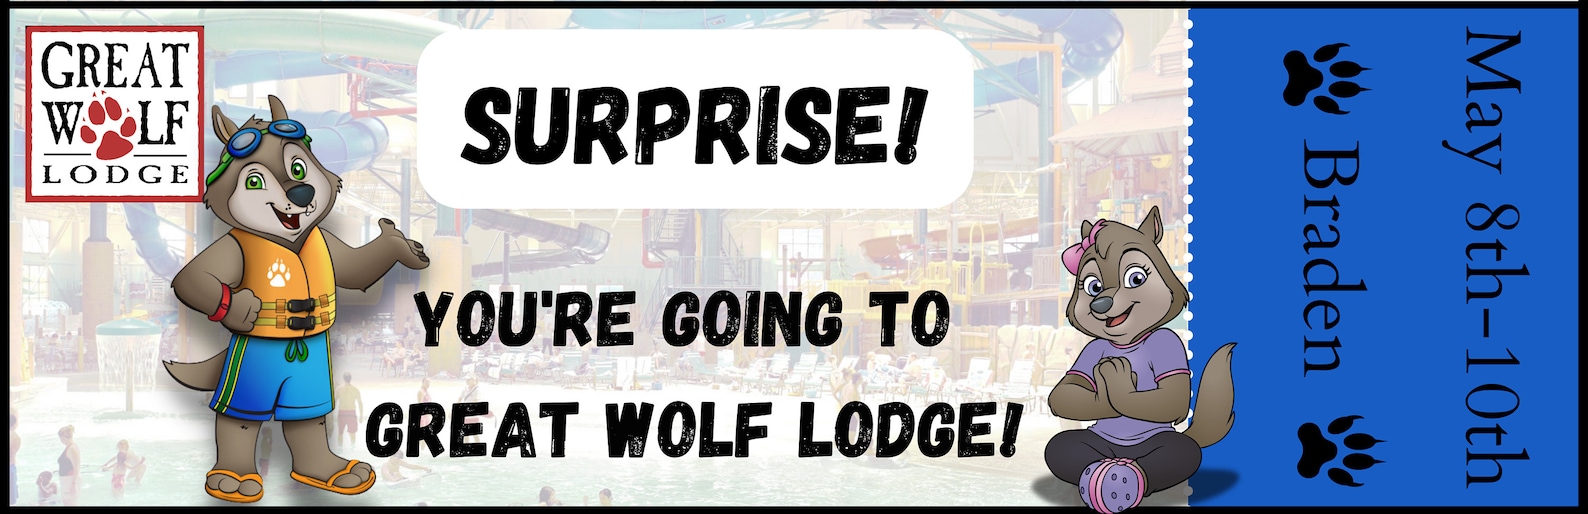 Great Wolf Lodge Ticket Great Wolf Lodge Surprise Ticket Etsy Australia